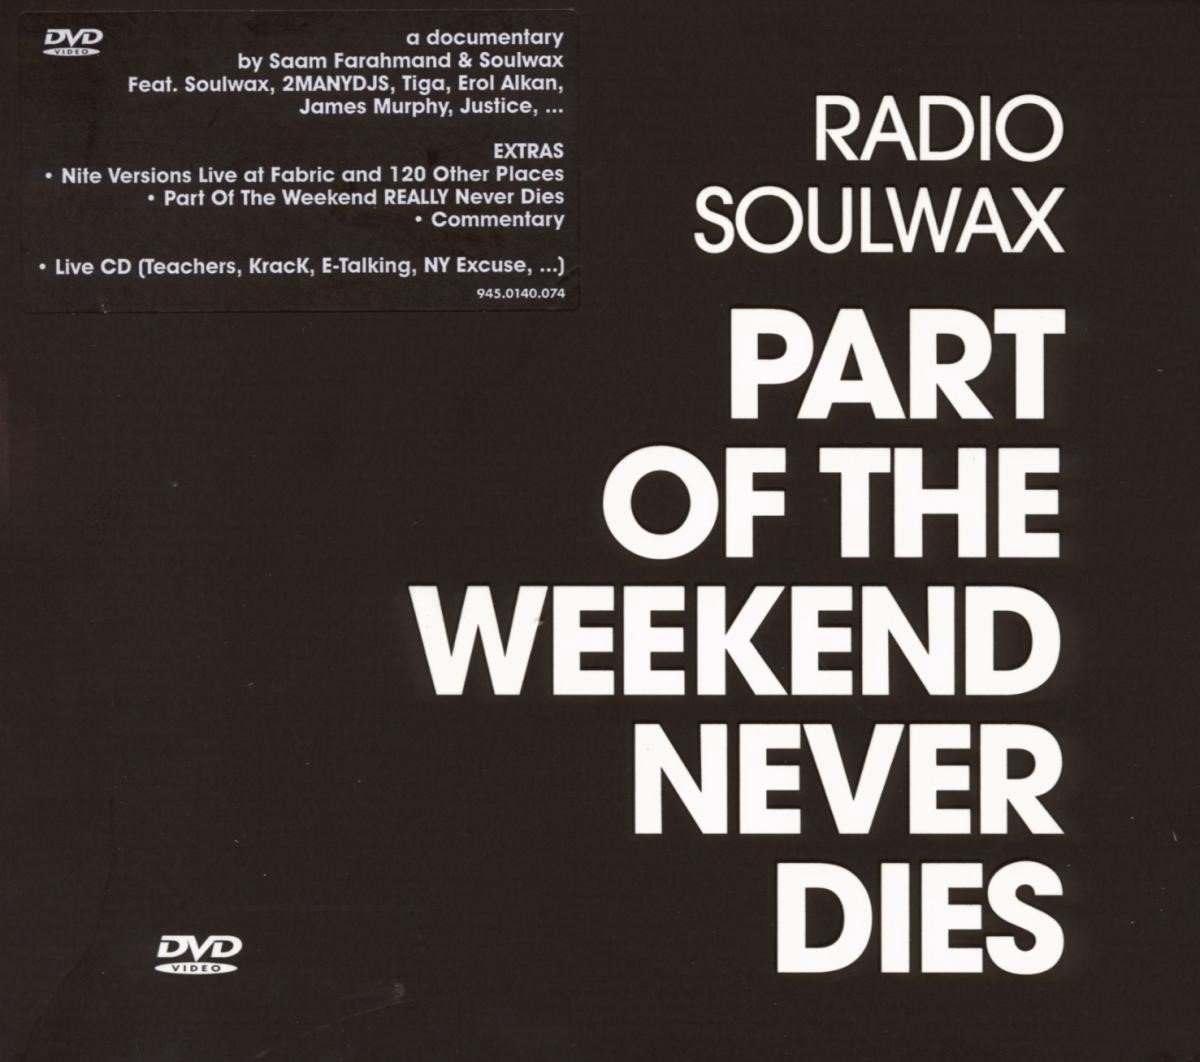 Radio Soulwax - part of The weekend never dies (DVD)